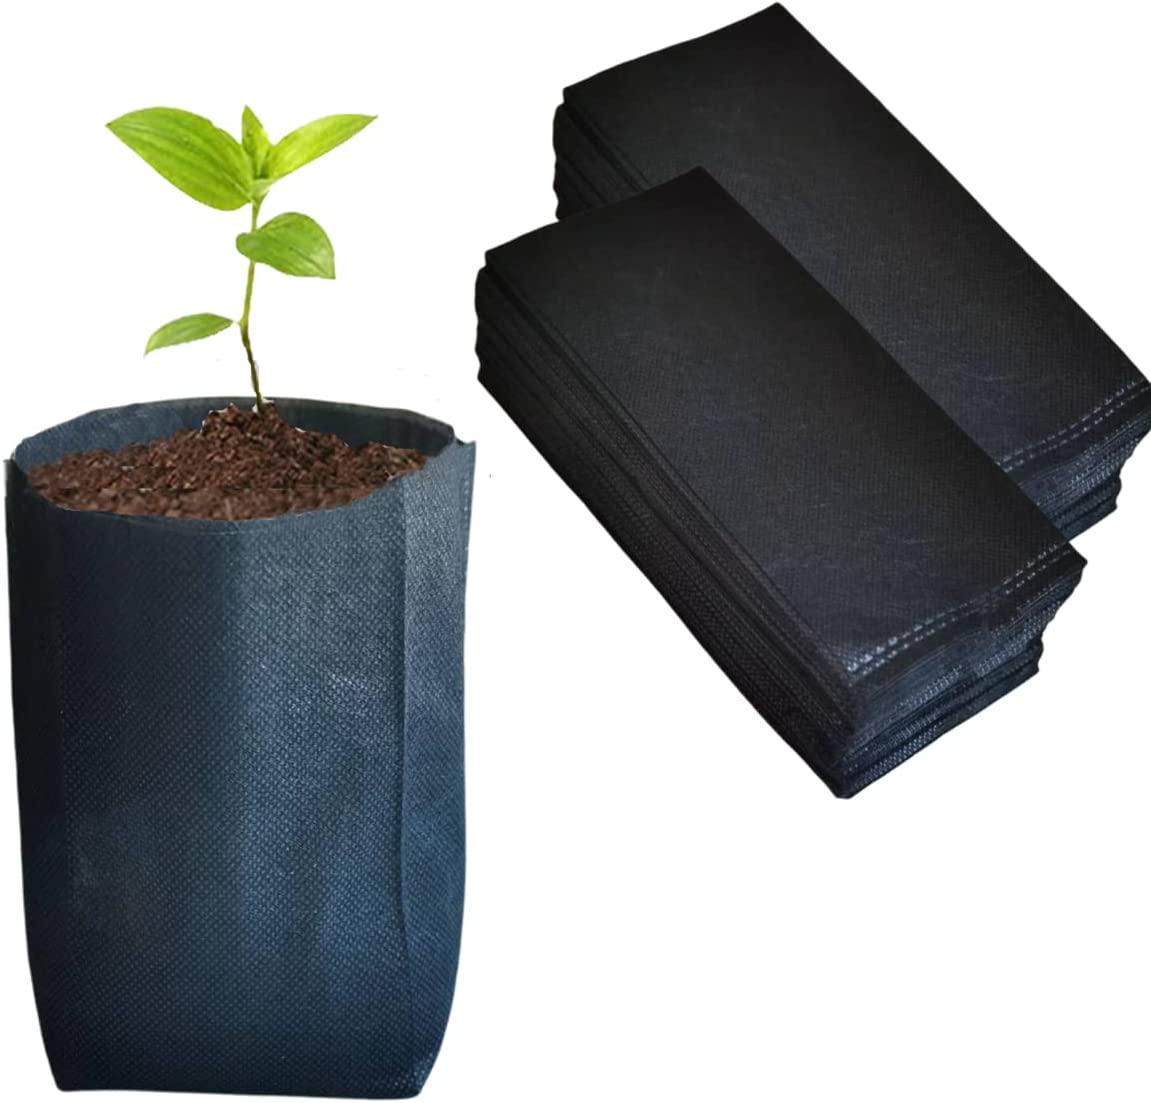 gardtree Plant Grow Bags 5.5 x 6.3 200PCS, Non-Woven Biodegradable Plant Nursery Bags for Fruit Vegetable Flower Saplings Tree